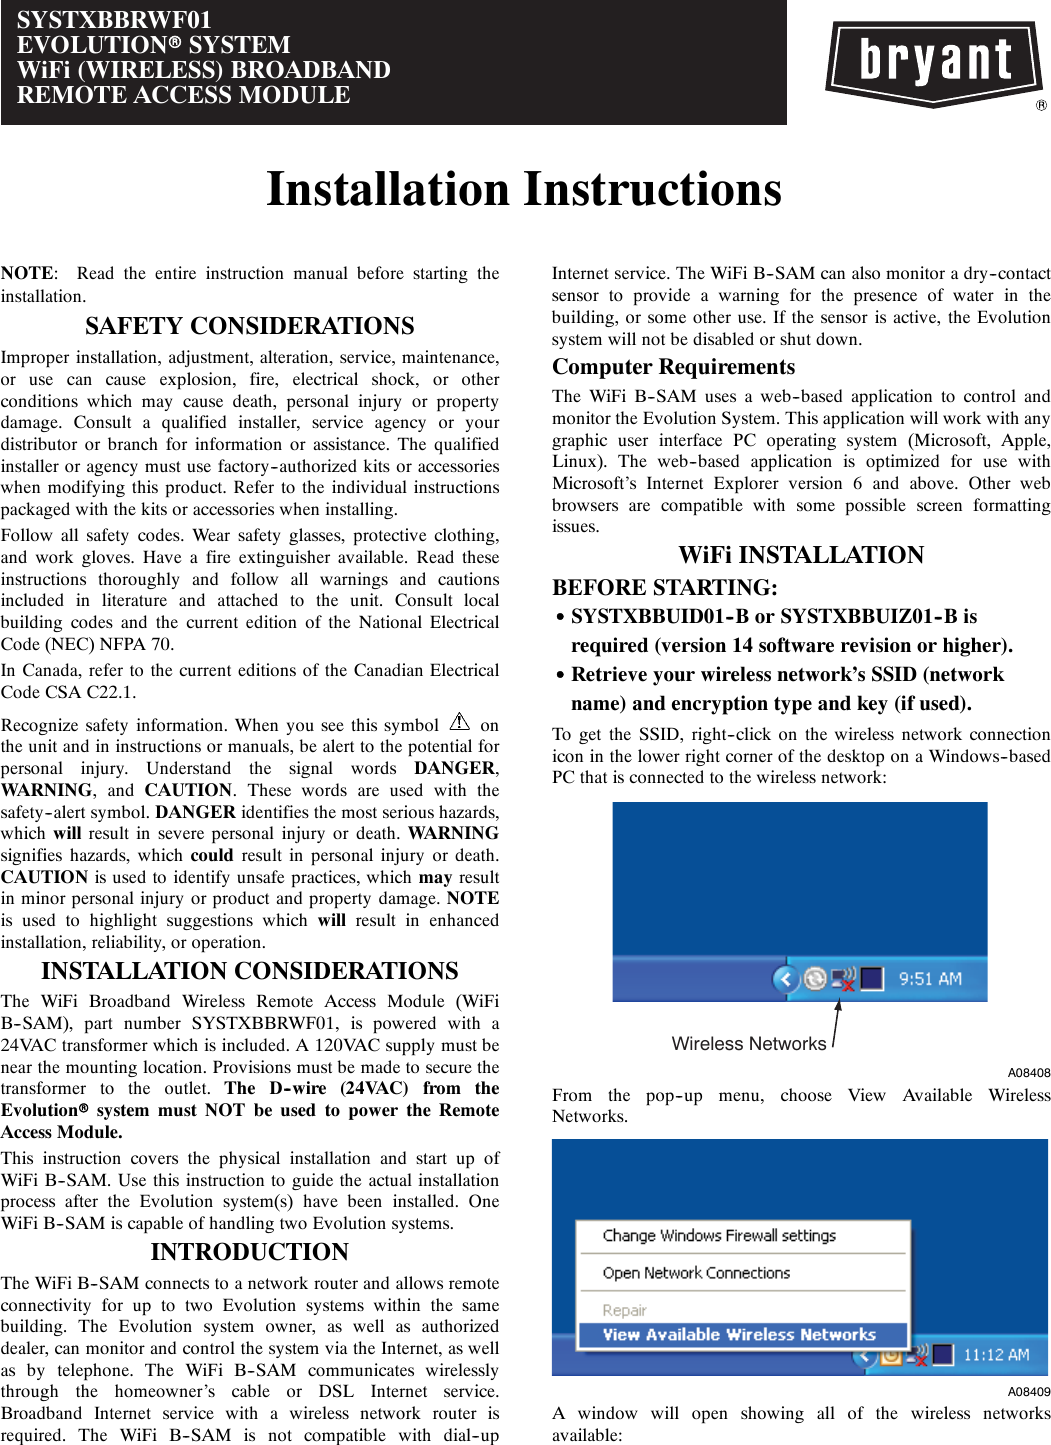 Page 1 of 6 - Bryant Bryant-Evolutionr-System-Systxbbrwf01-Users-Manual- Iibbrwf-01  Bryant-evolutionr-system-systxbbrwf01-users-manual